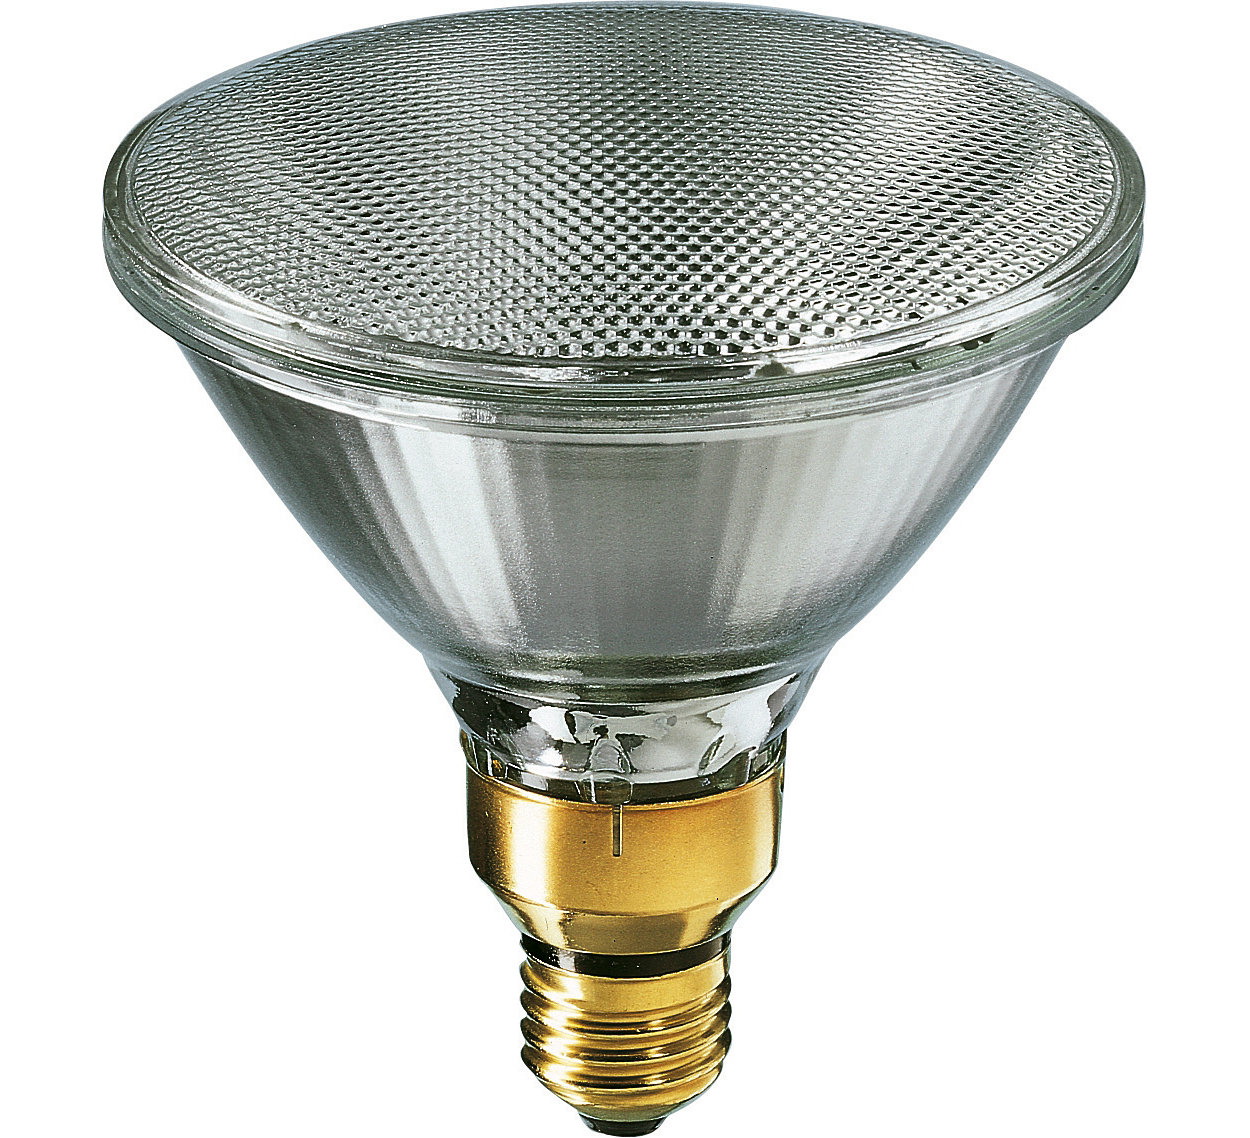 Bravo Lighting PAR38 18W IP65 LED E27 Equivalent To 150 W Halogen Lamp 3000 K, 